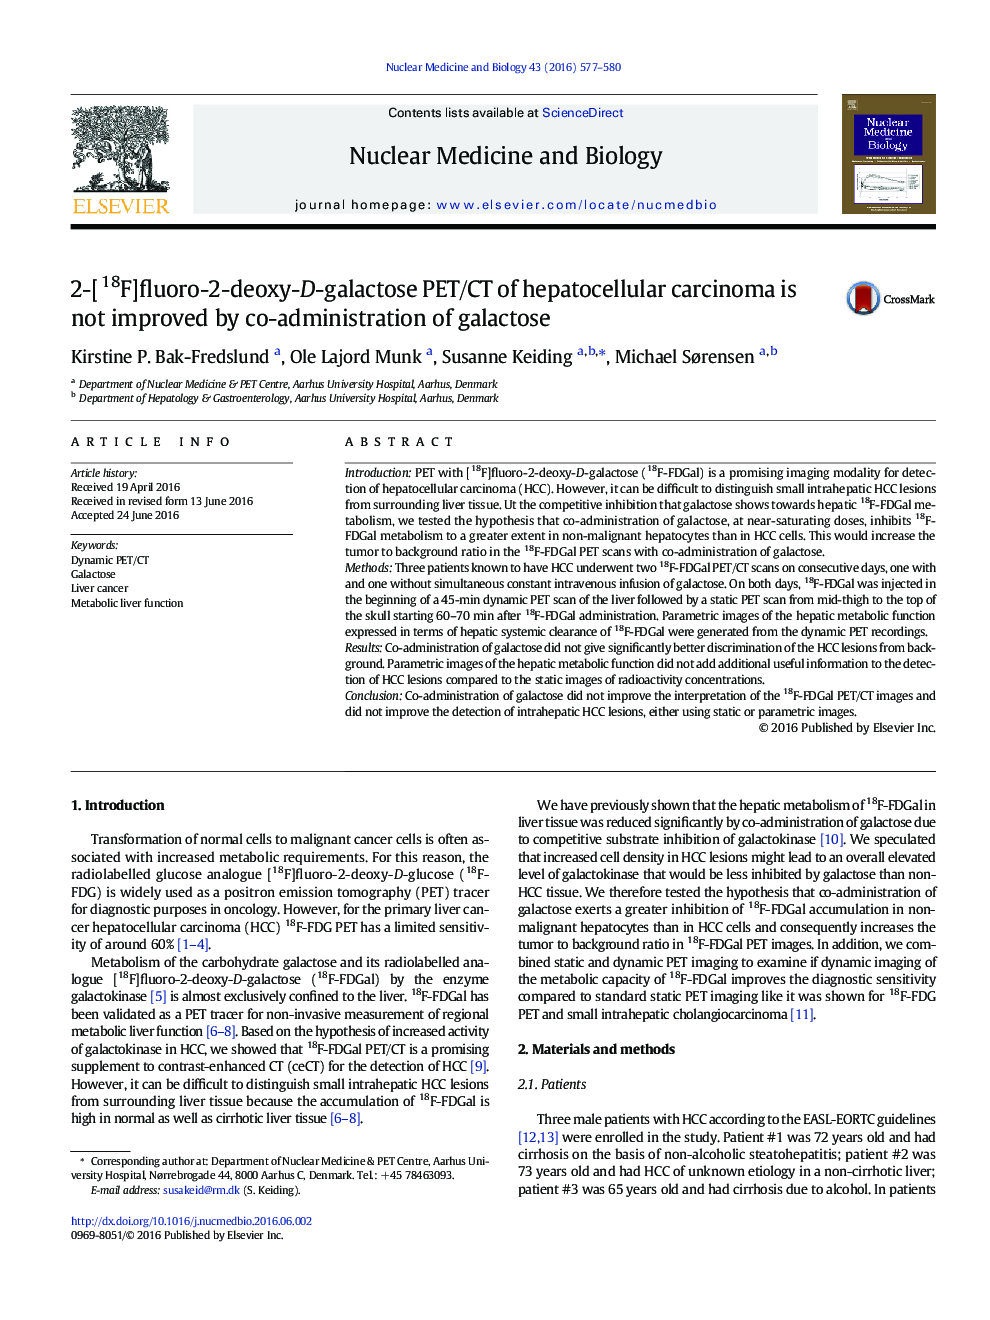 2- [18F] PET فلورو-2 دی اکسی-D-گالاکتوز/CT کارسینوم هپاتوسلولار با تجویز مشترک گالاکتوز بهبود پیدا نکرده است